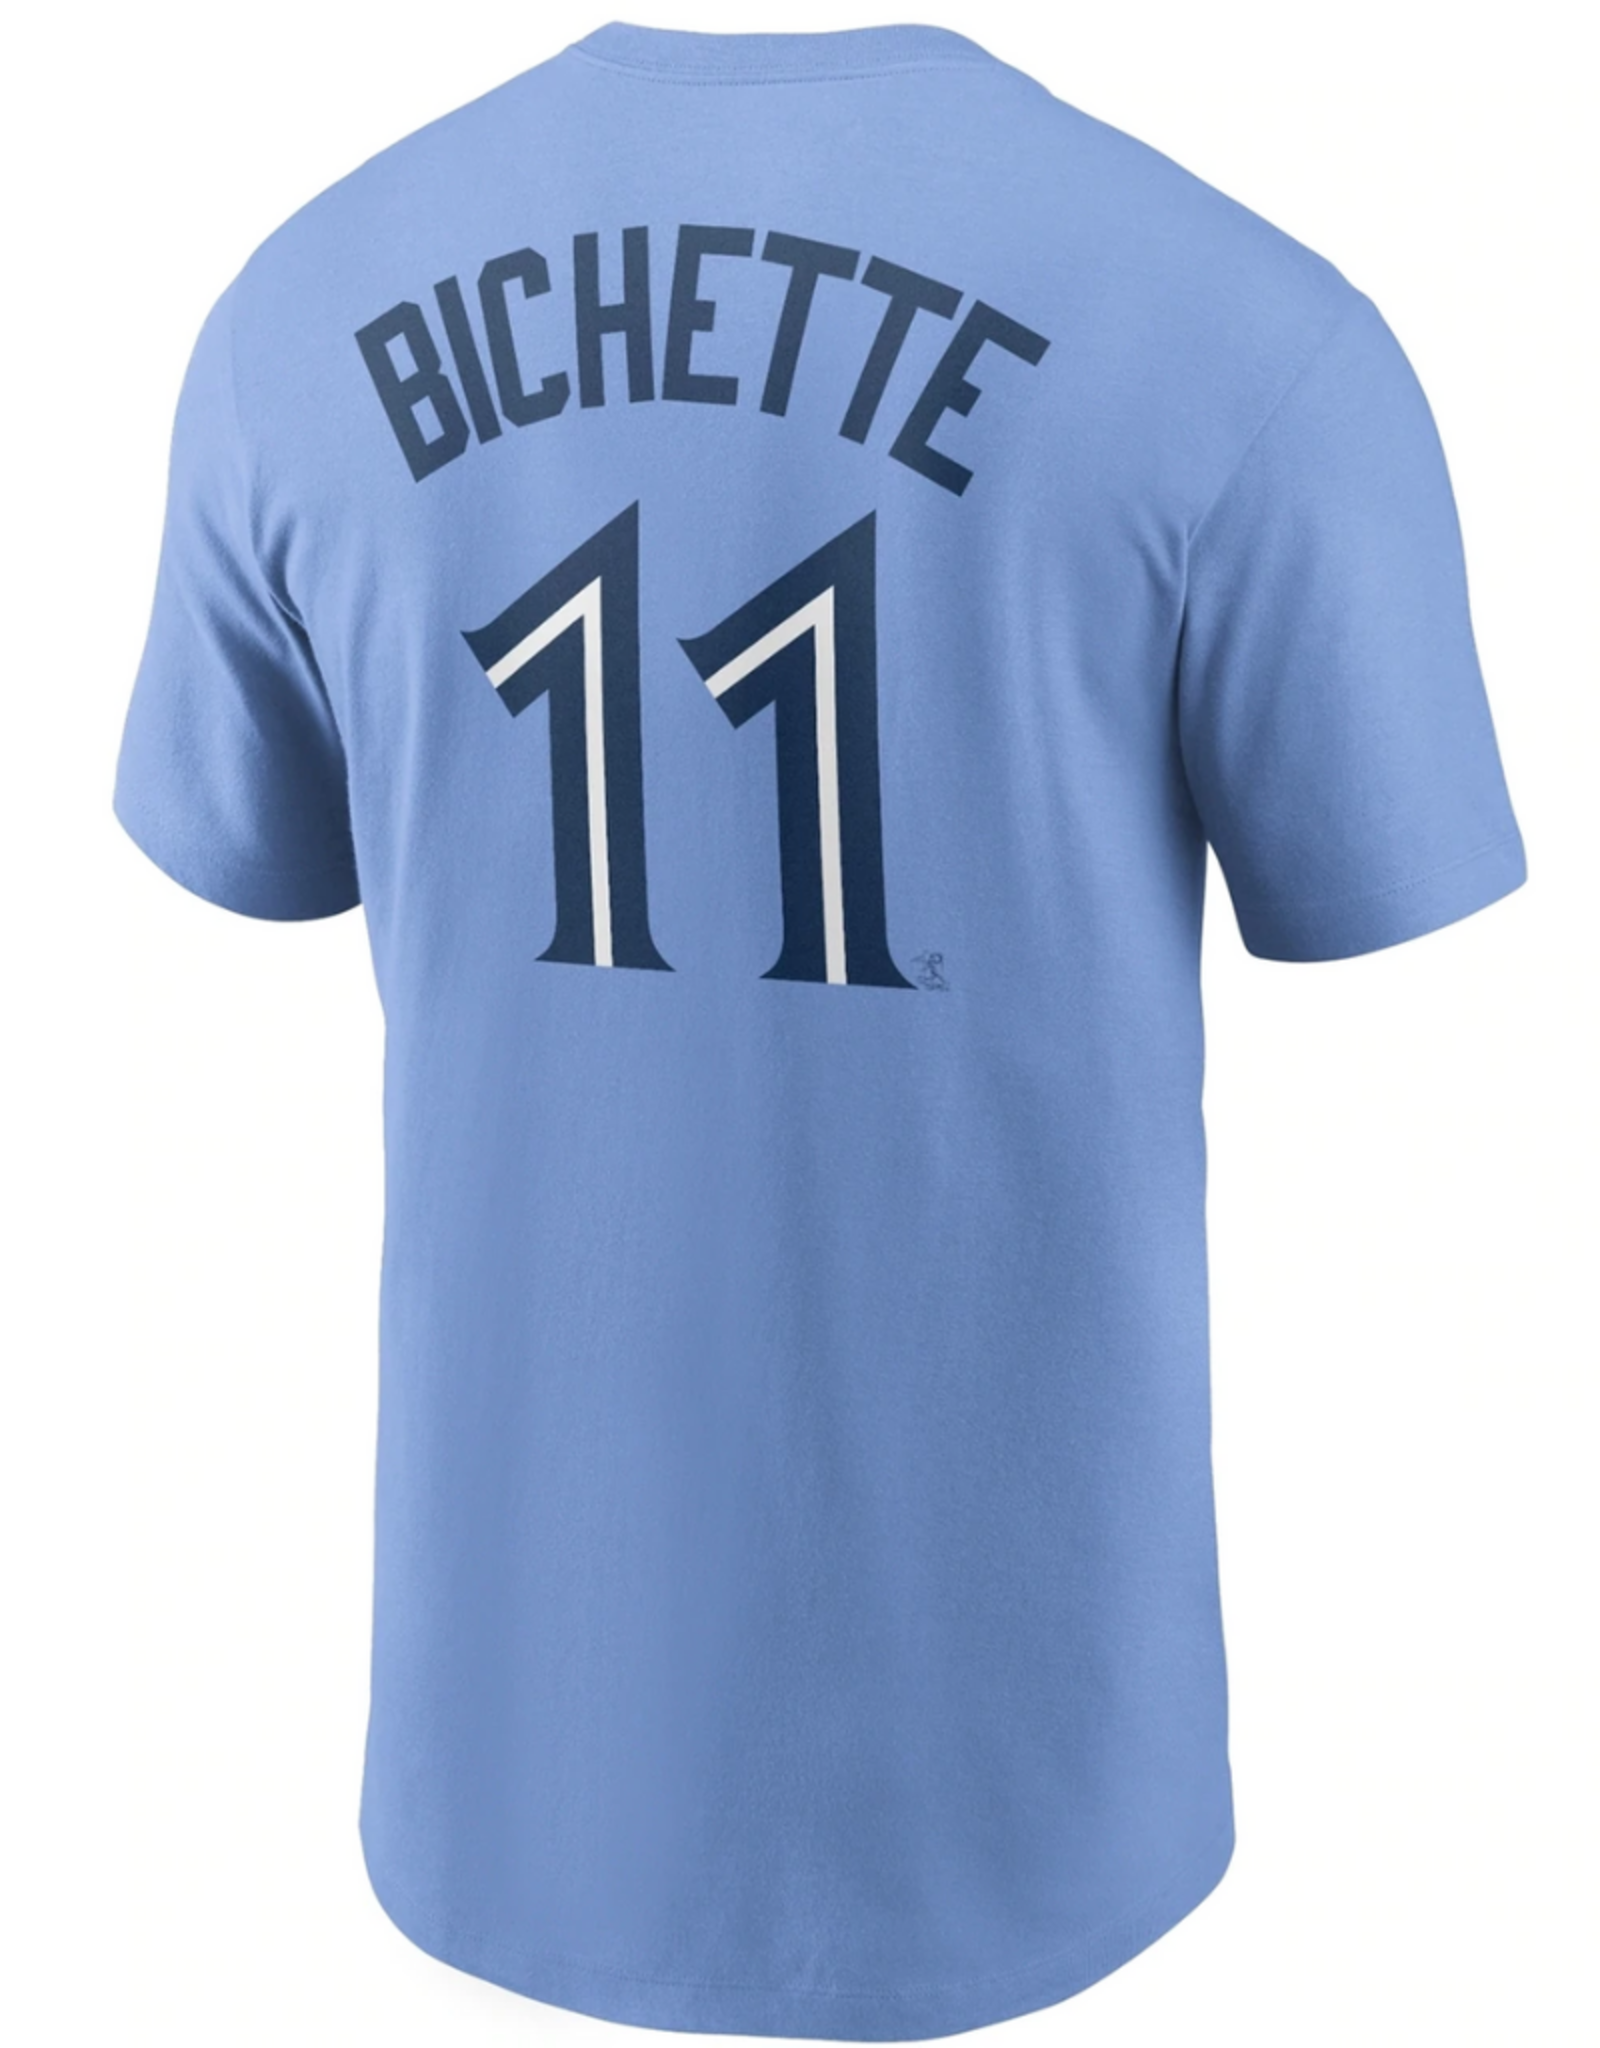 Men's Player T-Shirt Bichette #11 Toronto Blue Jays Valor Blue